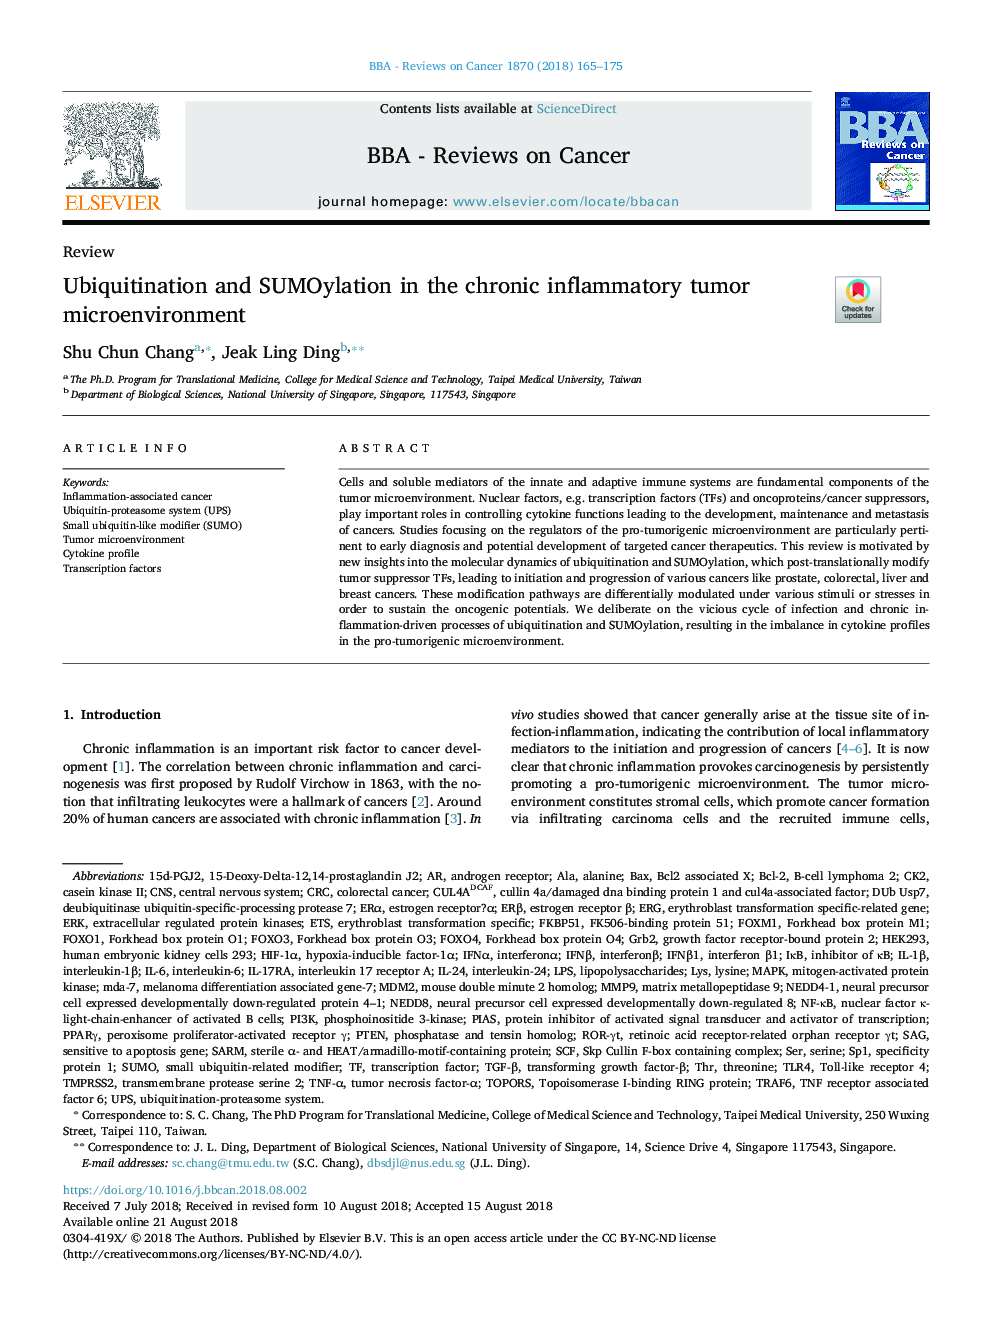 Ubiquitination and SUMOylation in the chronic inflammatory tumor microenvironment